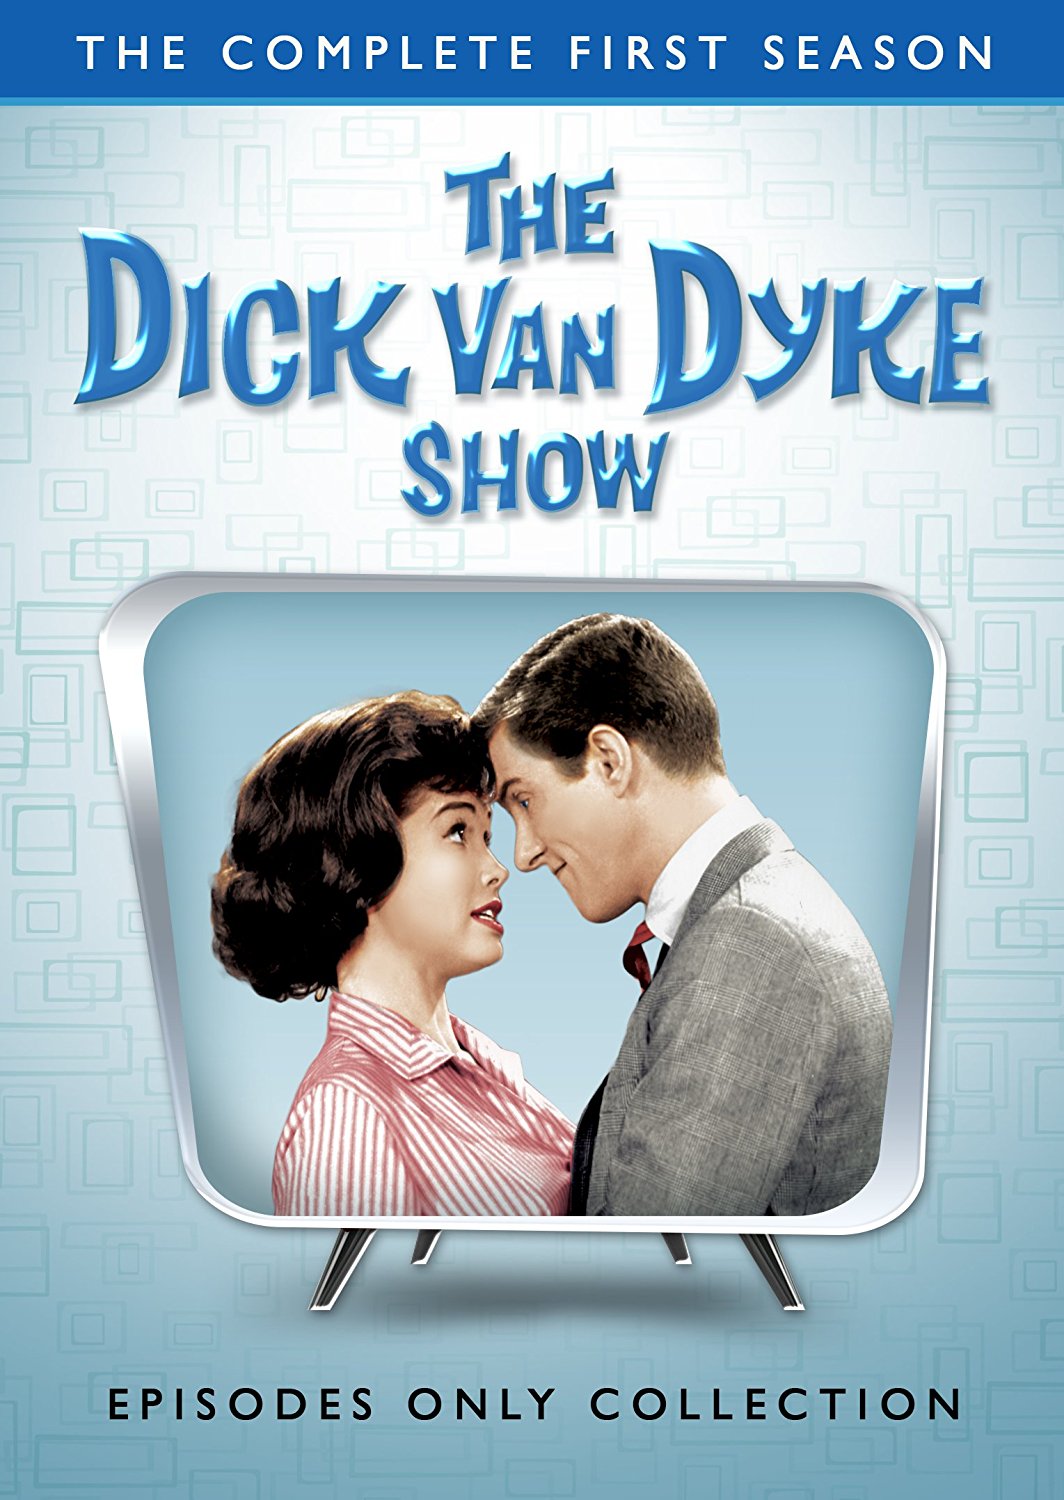 The dick van dyke show season 1 episodes